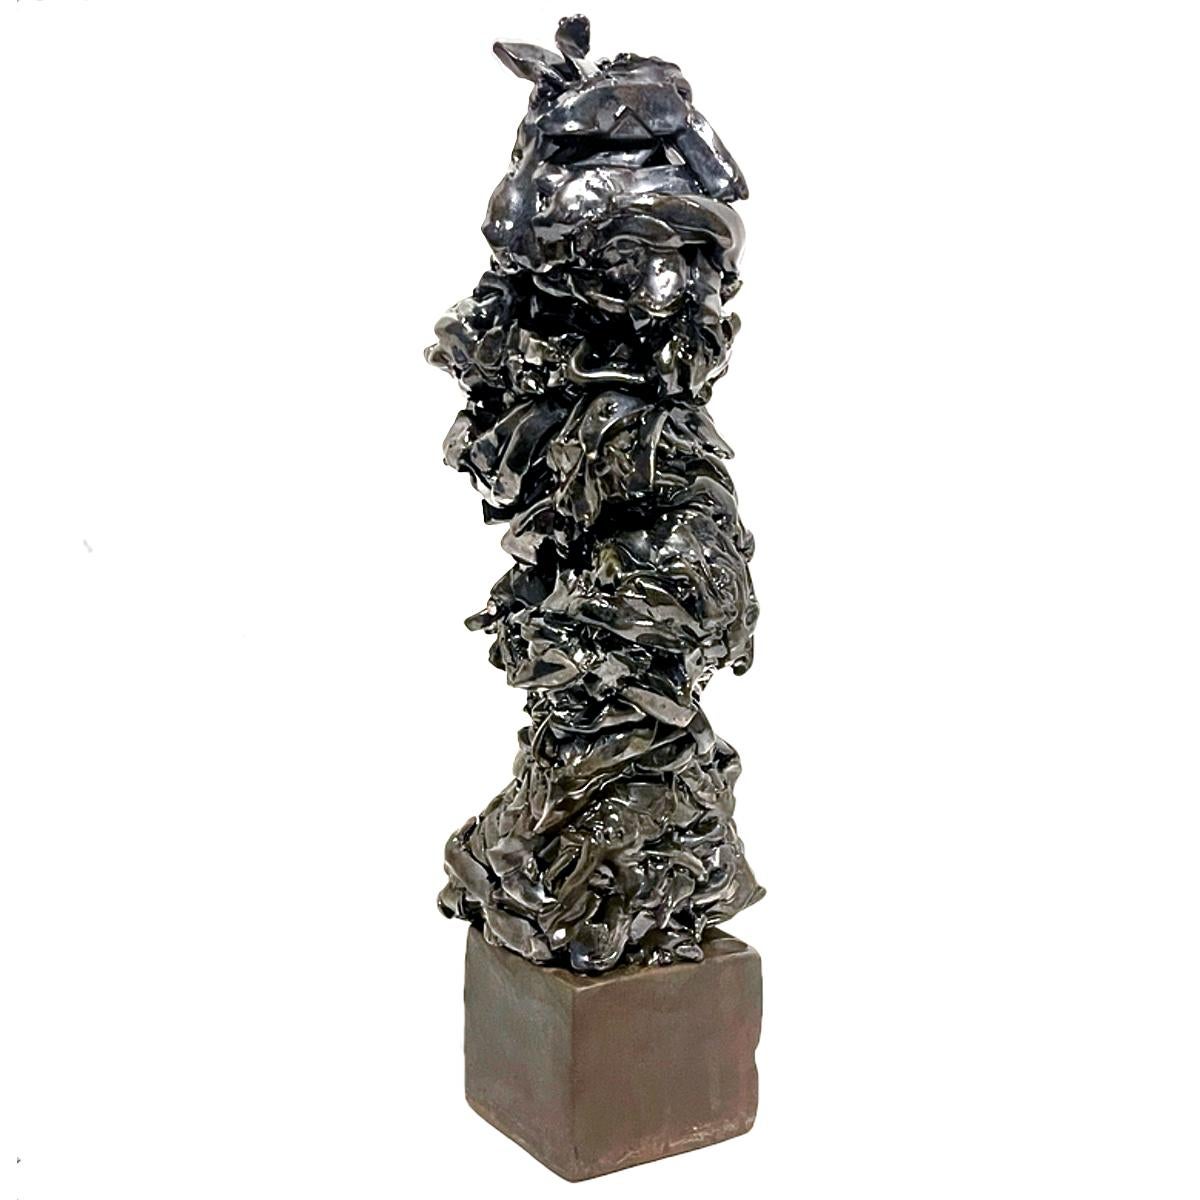 Judy Engel Figurative Sculpture - Tall Metallic Palladium Abstract Expressionist Brutalist Totem Sculpture